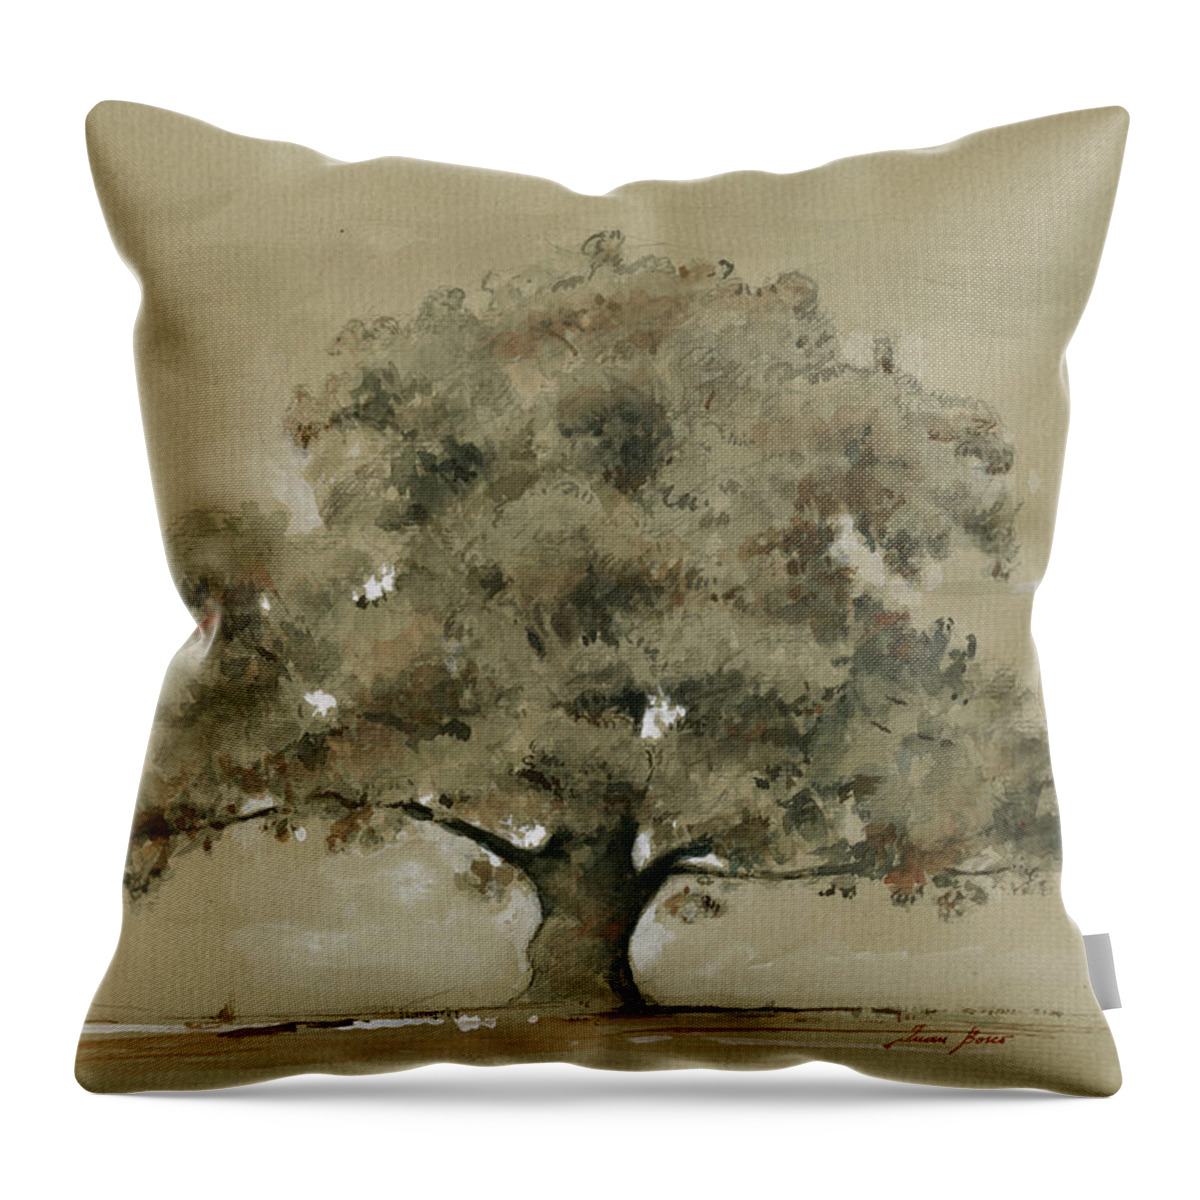 Quercus Robur Art Throw Pillow featuring the painting Quercus robur drawing by Juan Bosco